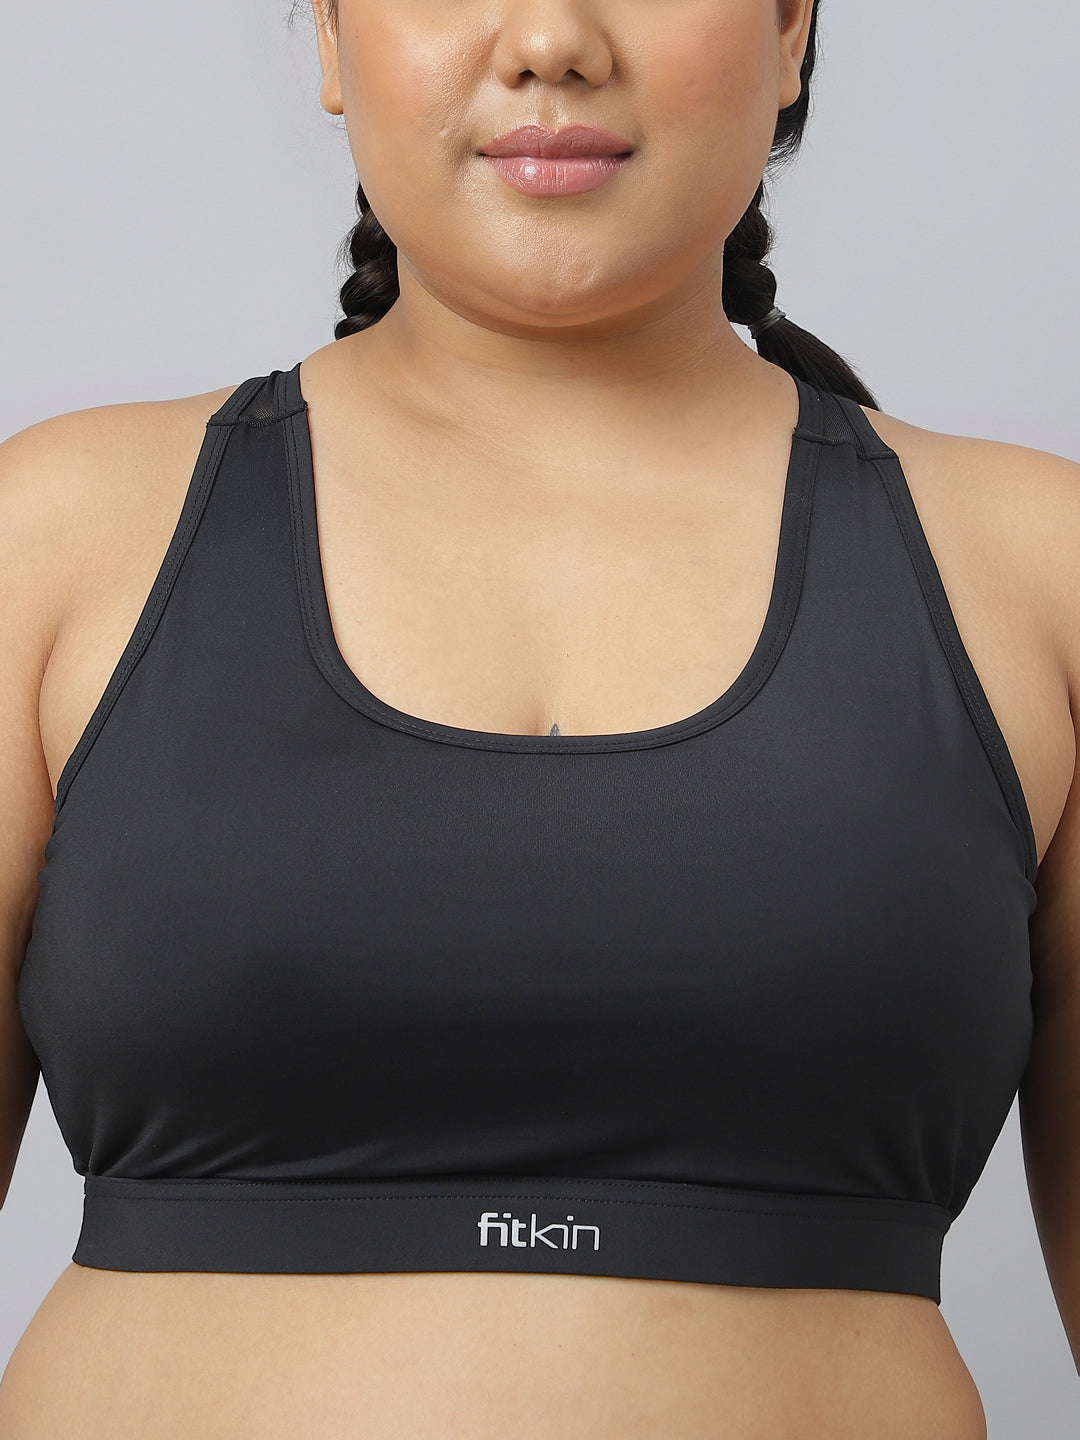 Buy Fitkin Fikin Plus Size Multi Strap Medium Support Black Sports